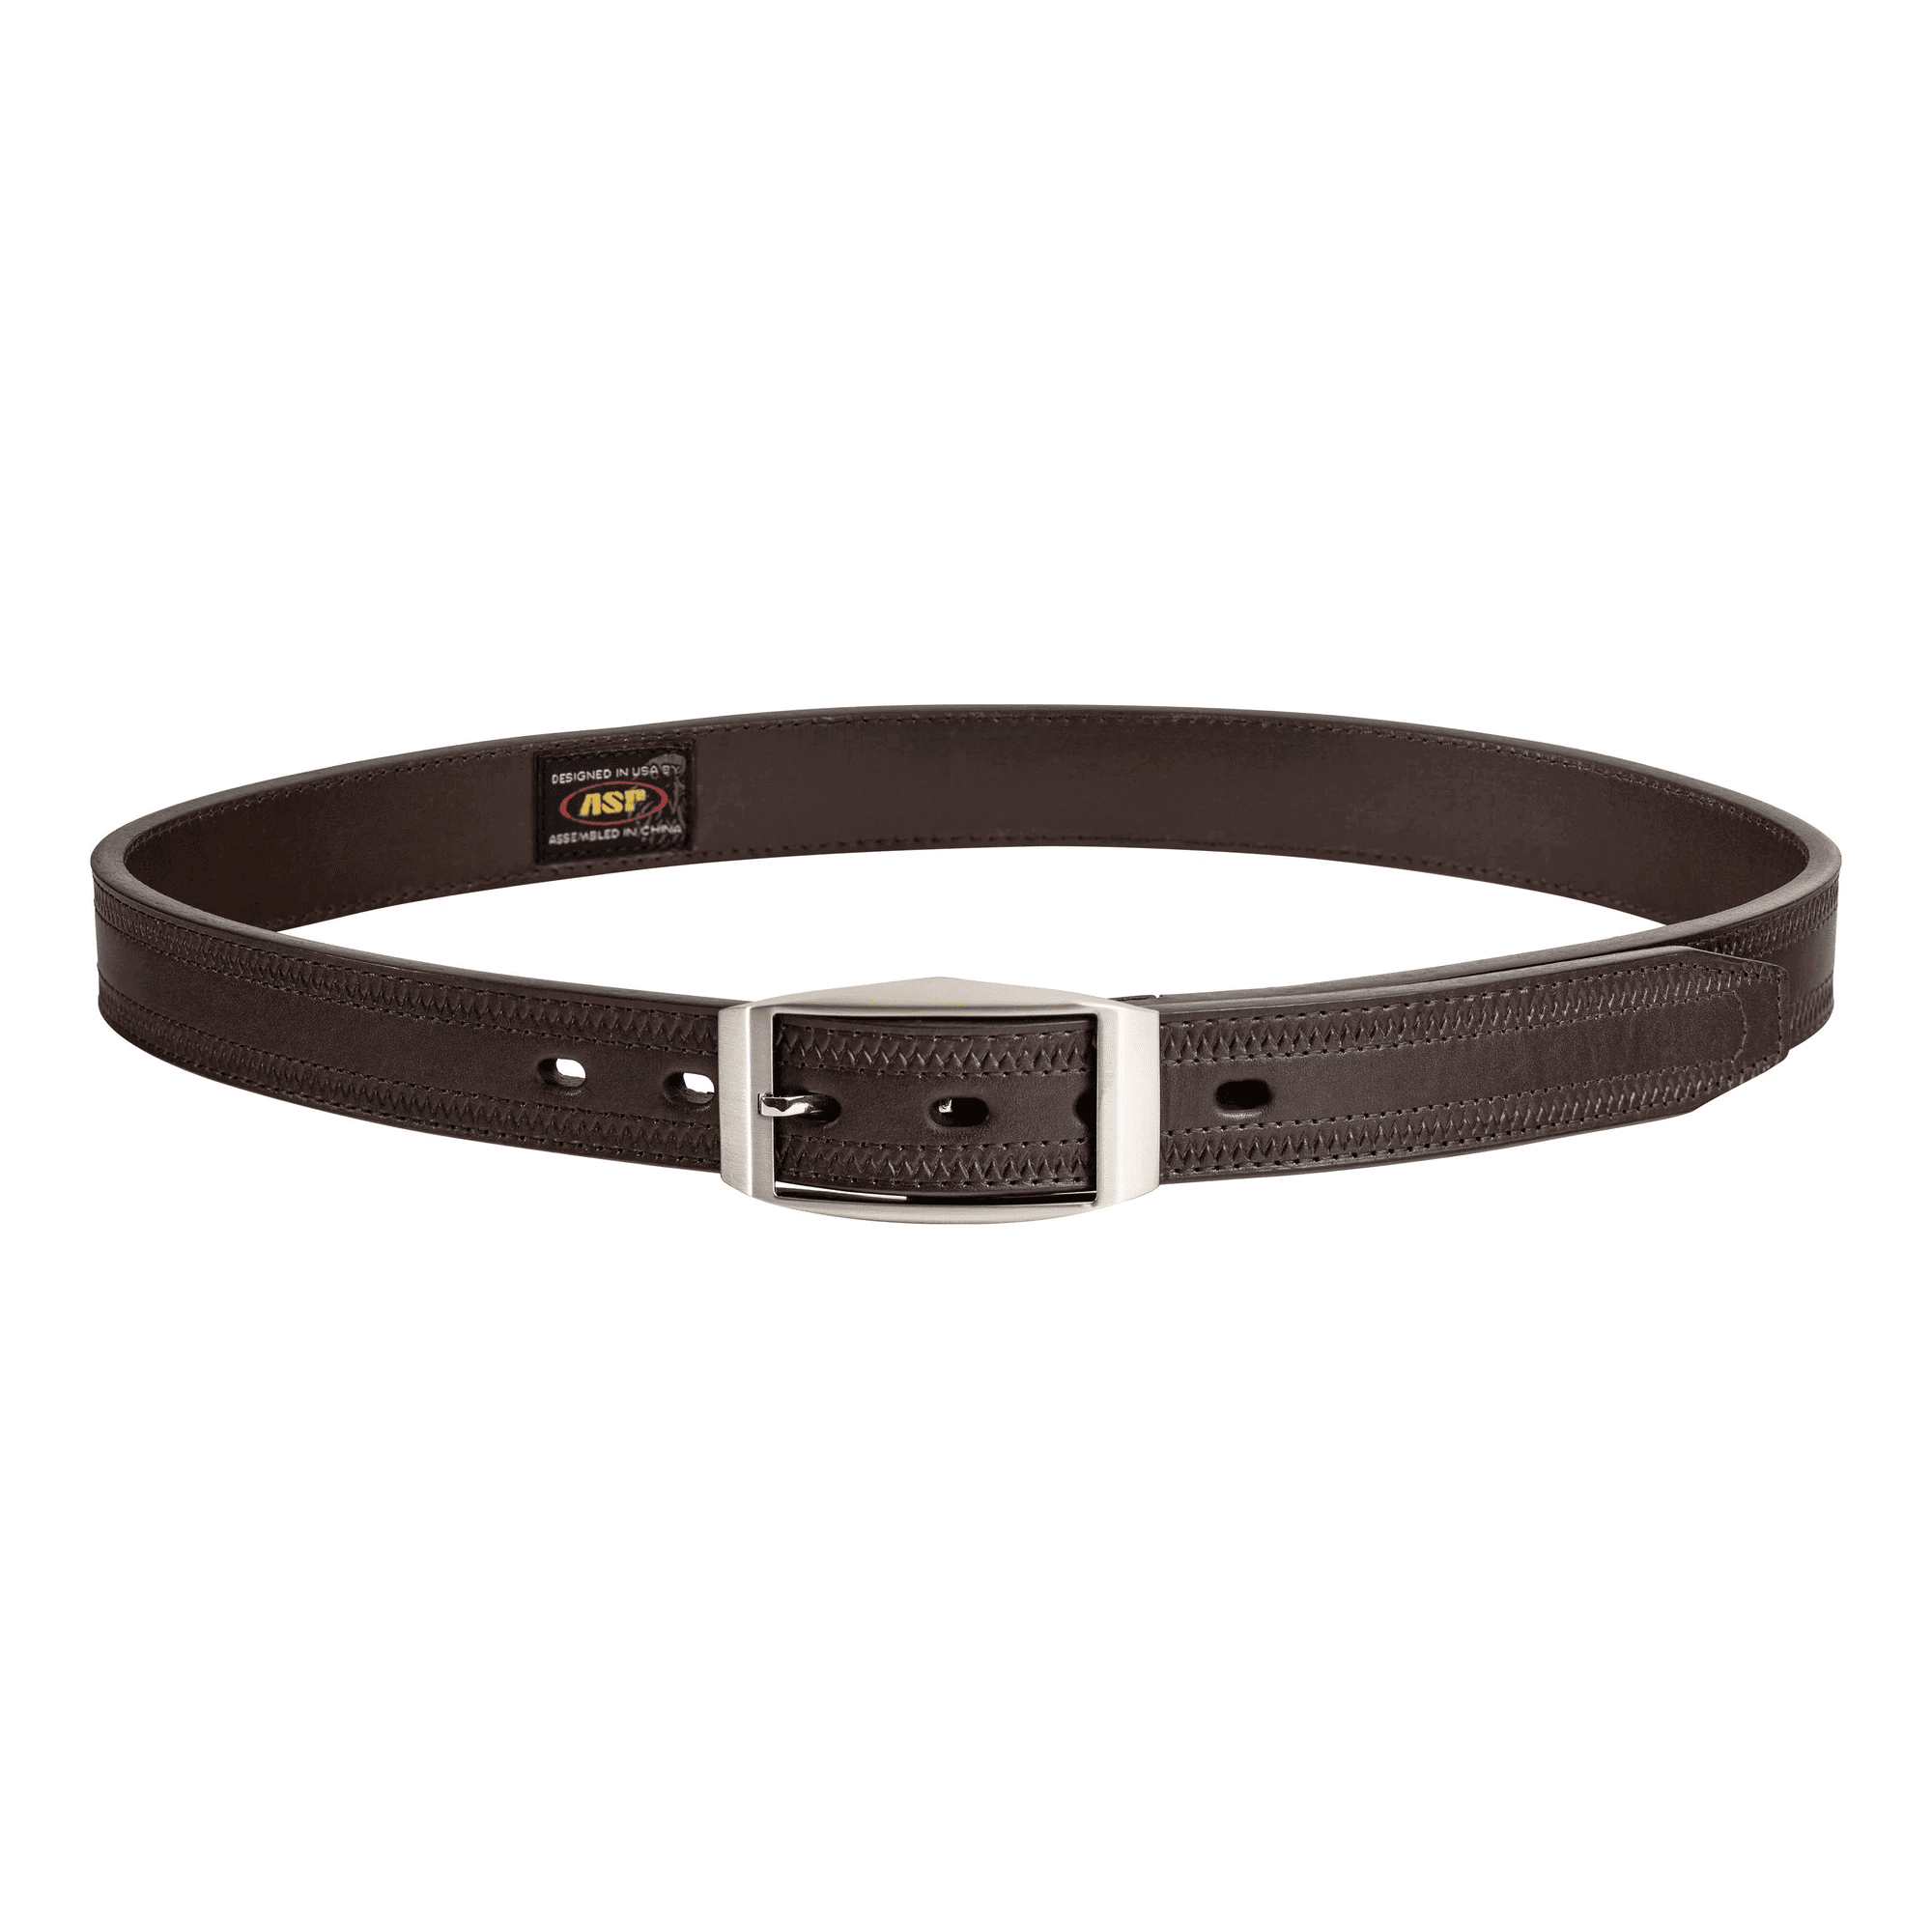 ASP Agent Belt, Leather (1.25'') - Brown, 30